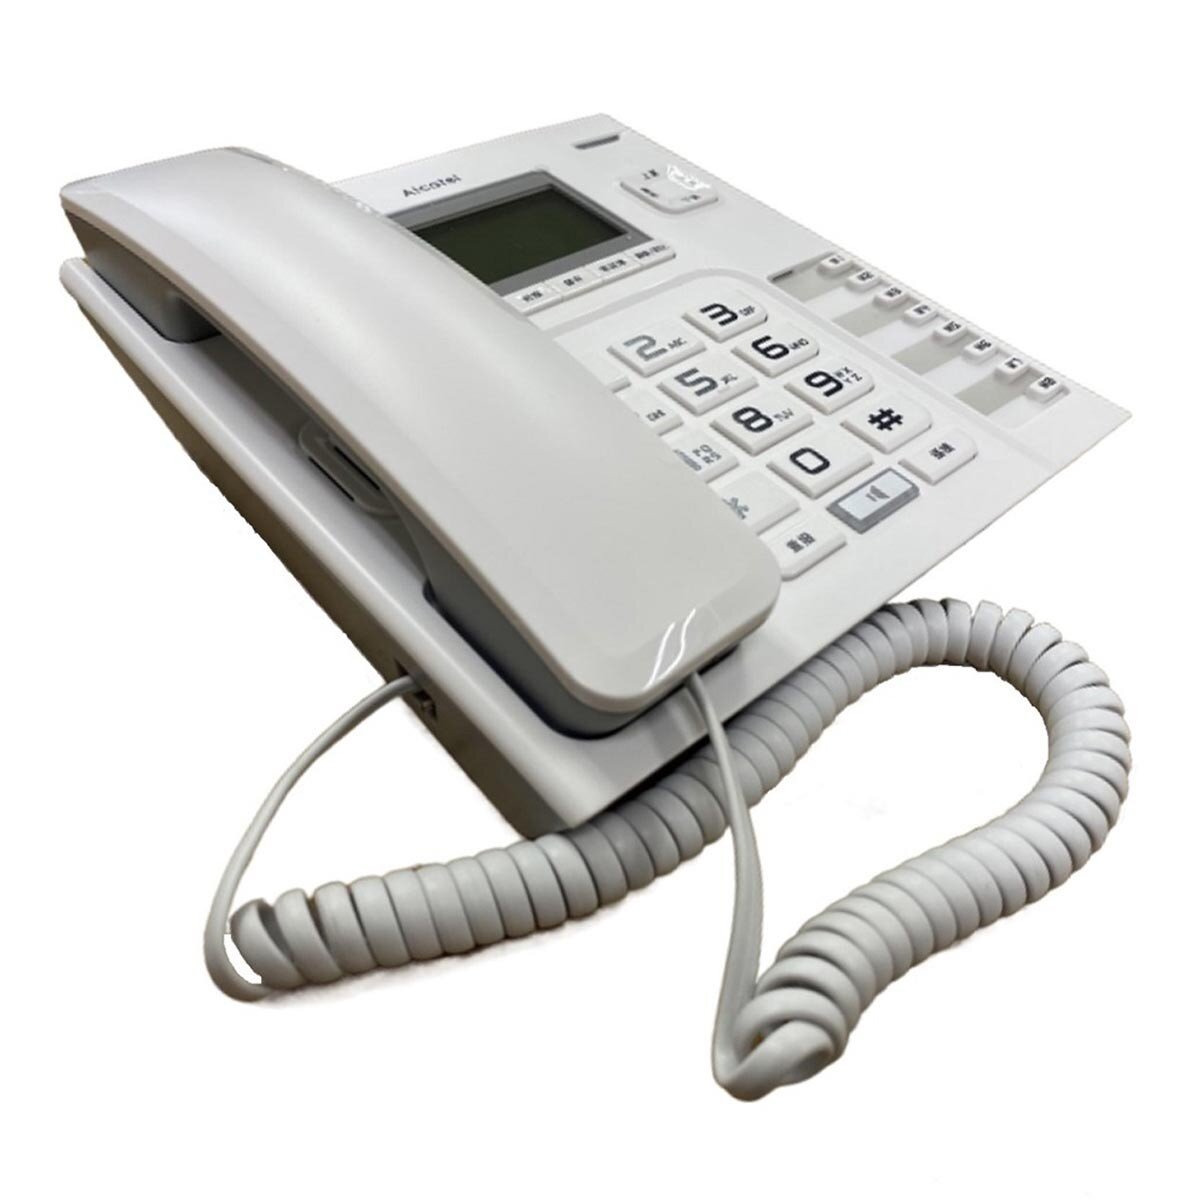 Alcatel 交換機專用家用電話 T76 TW 白